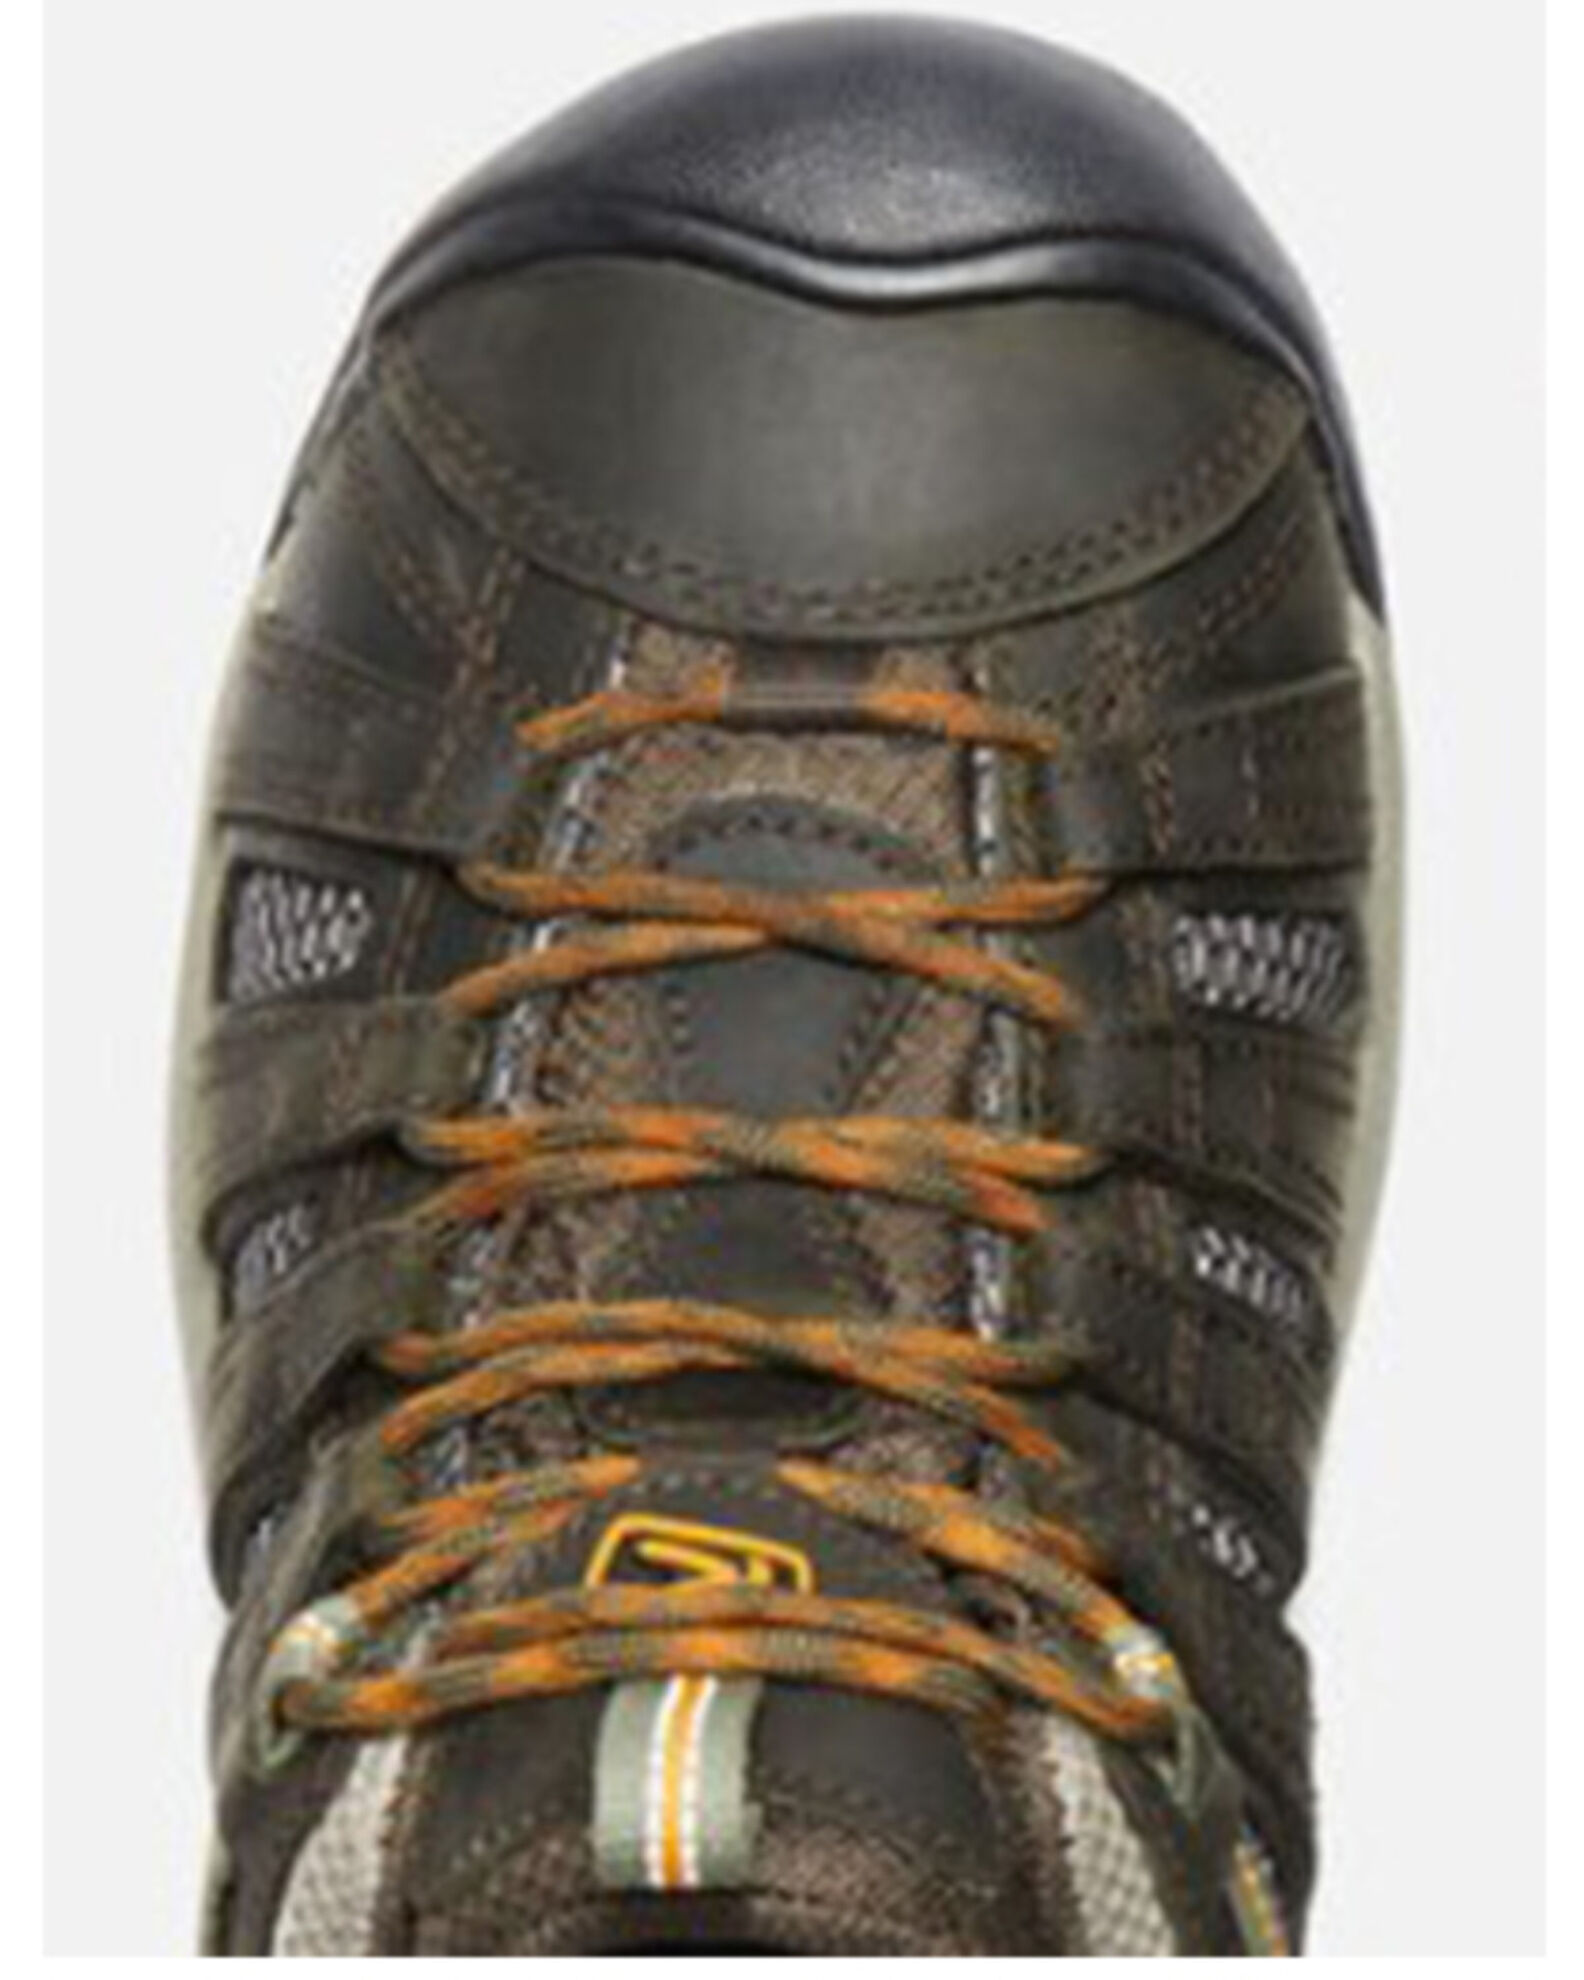 Keen Men's Voyageur Hiking Shoes - Soft Toe